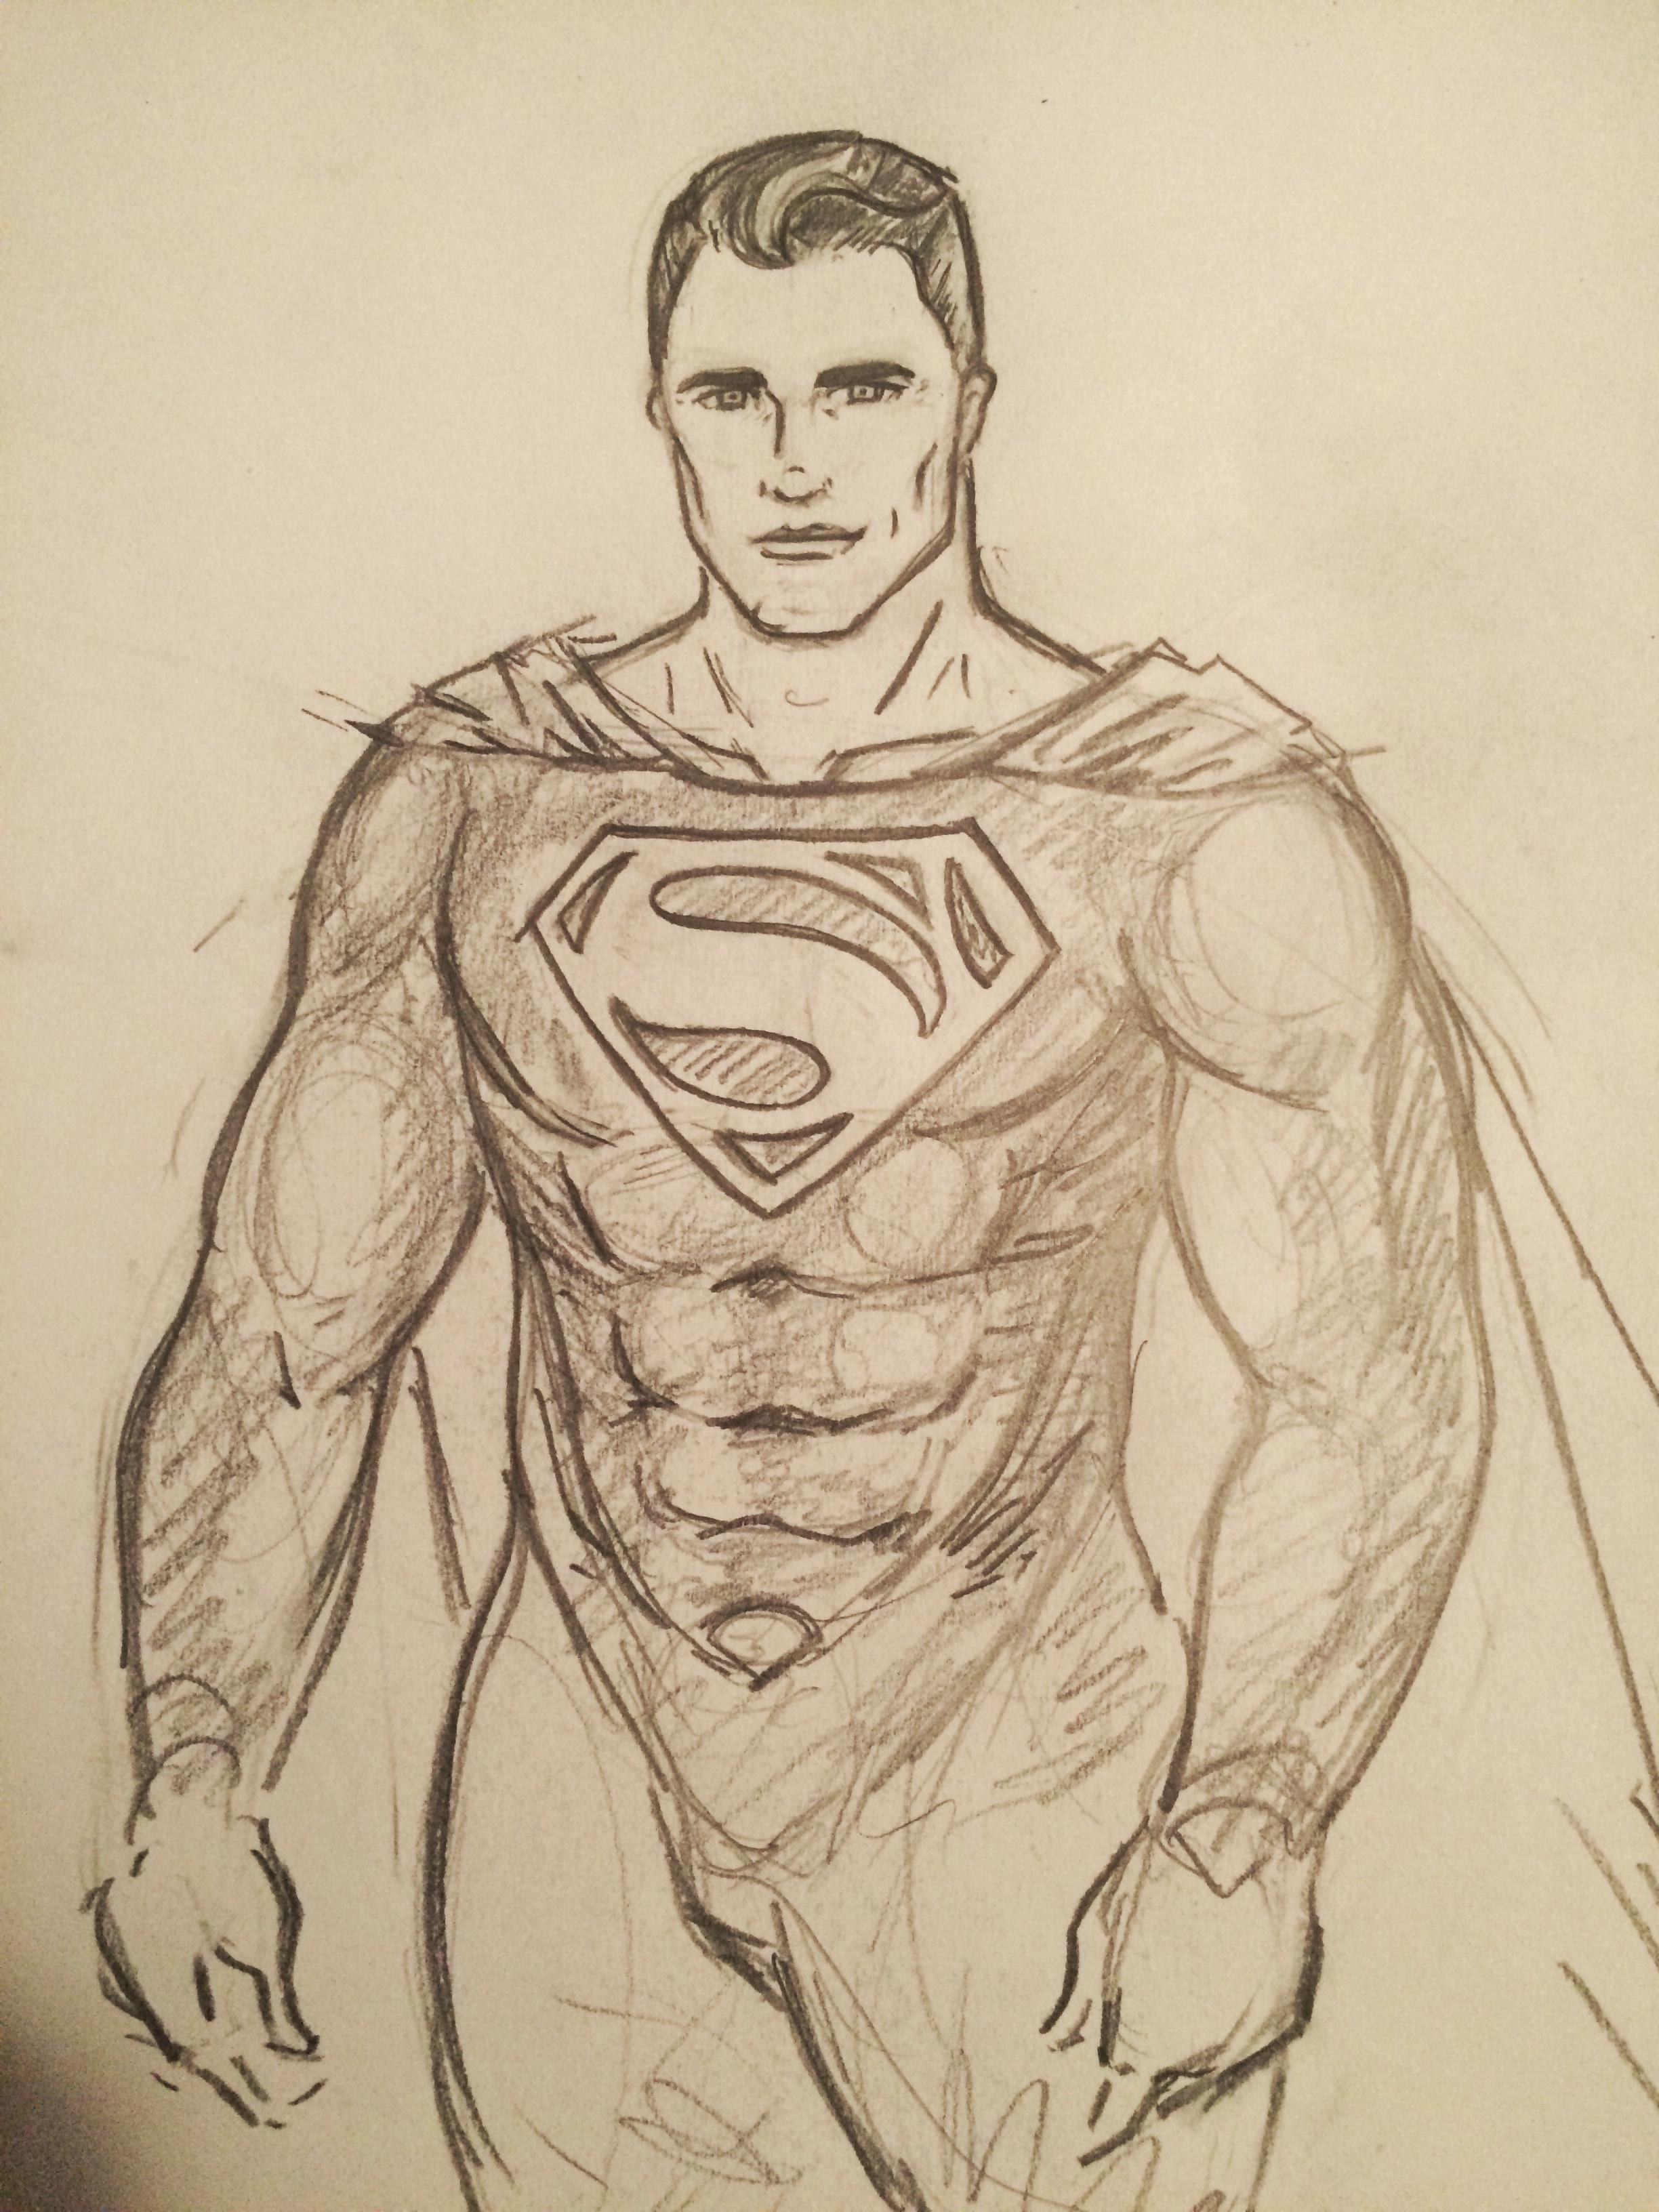 Superman Image Drawing